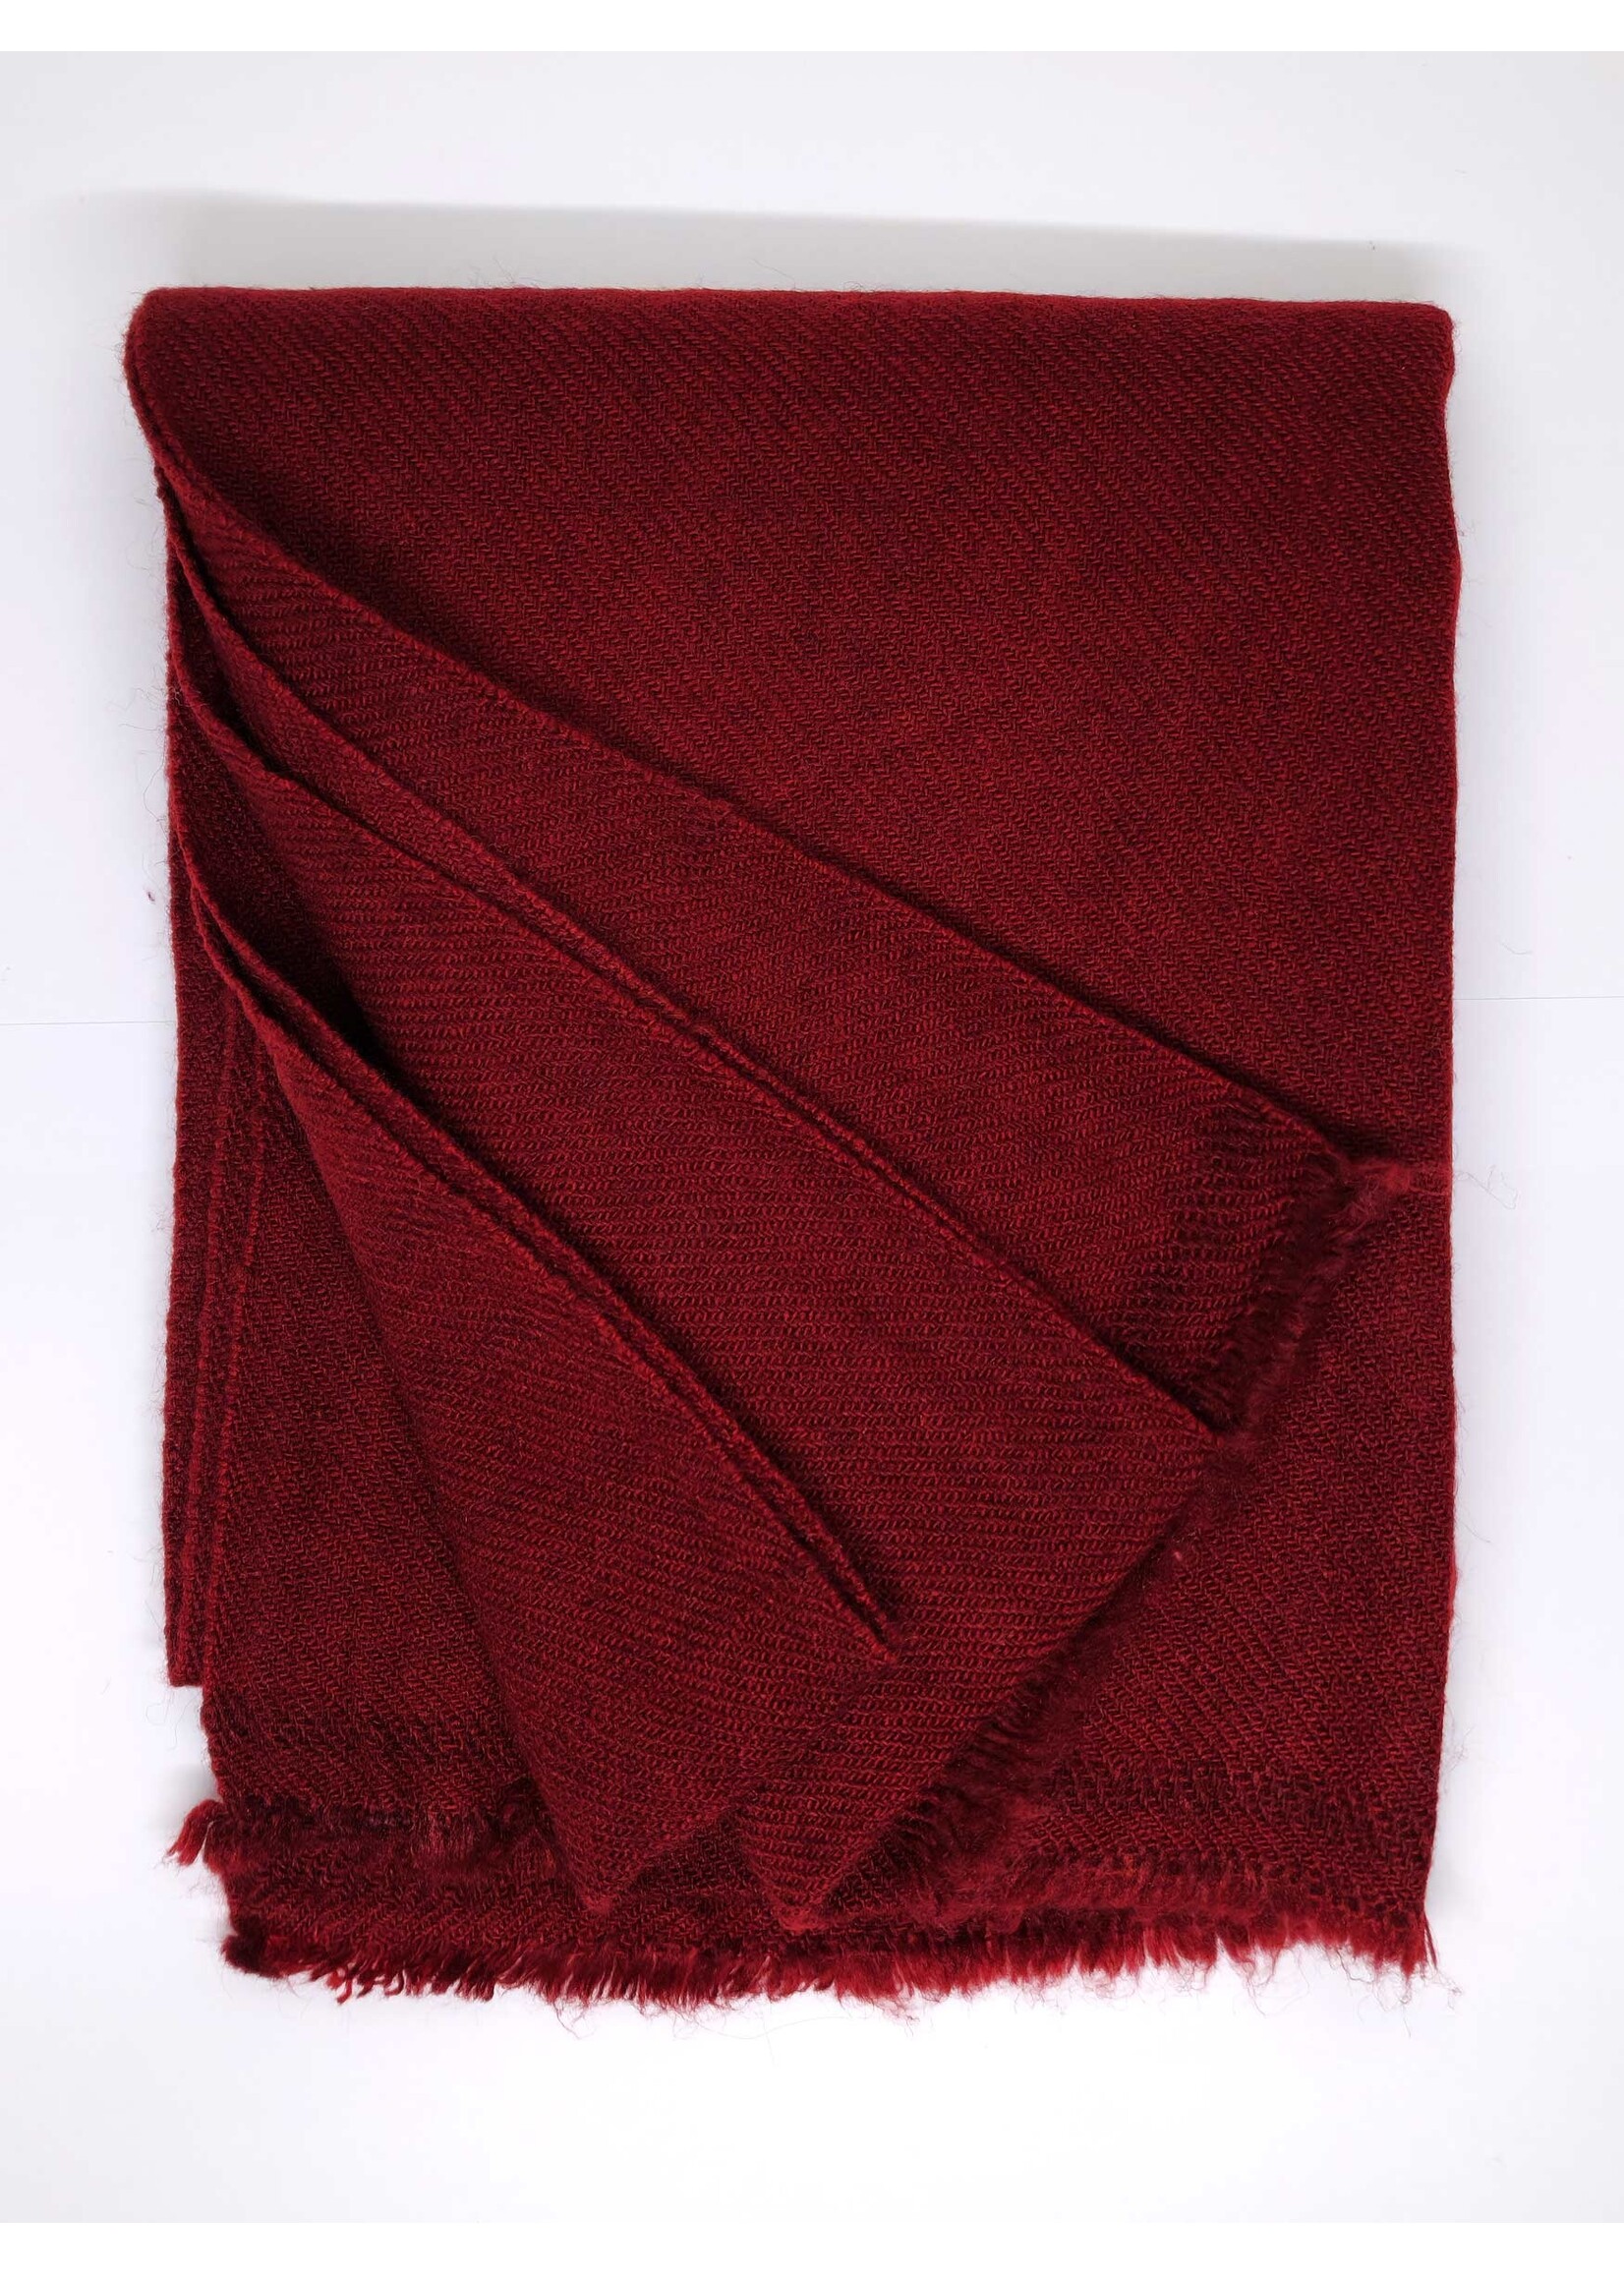 Burgundy Red Pashmina Scarf, 35 x 160 cm